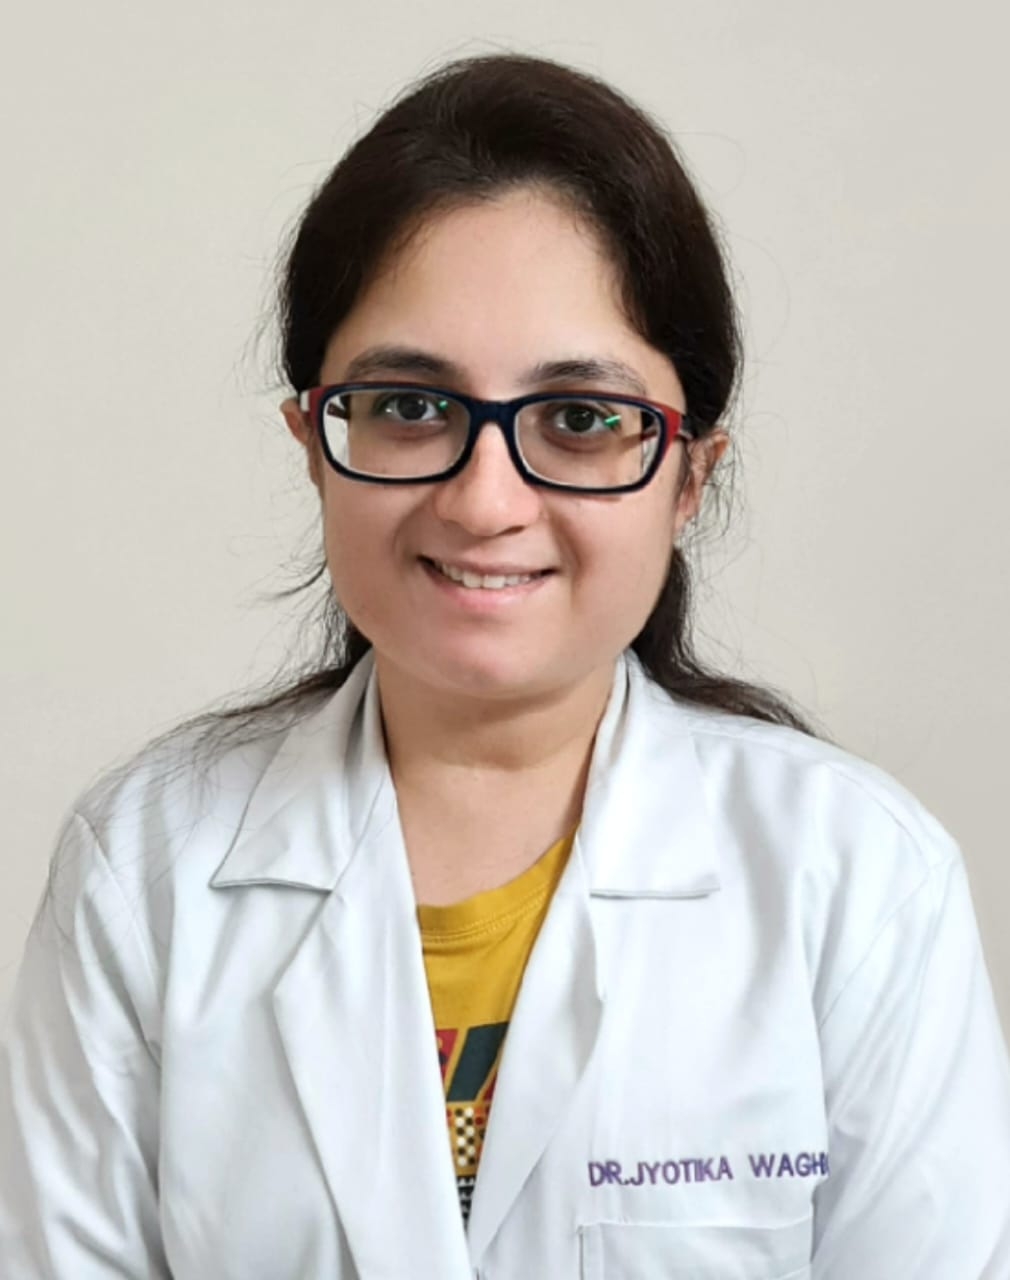 Dr. Jyotika Waghray